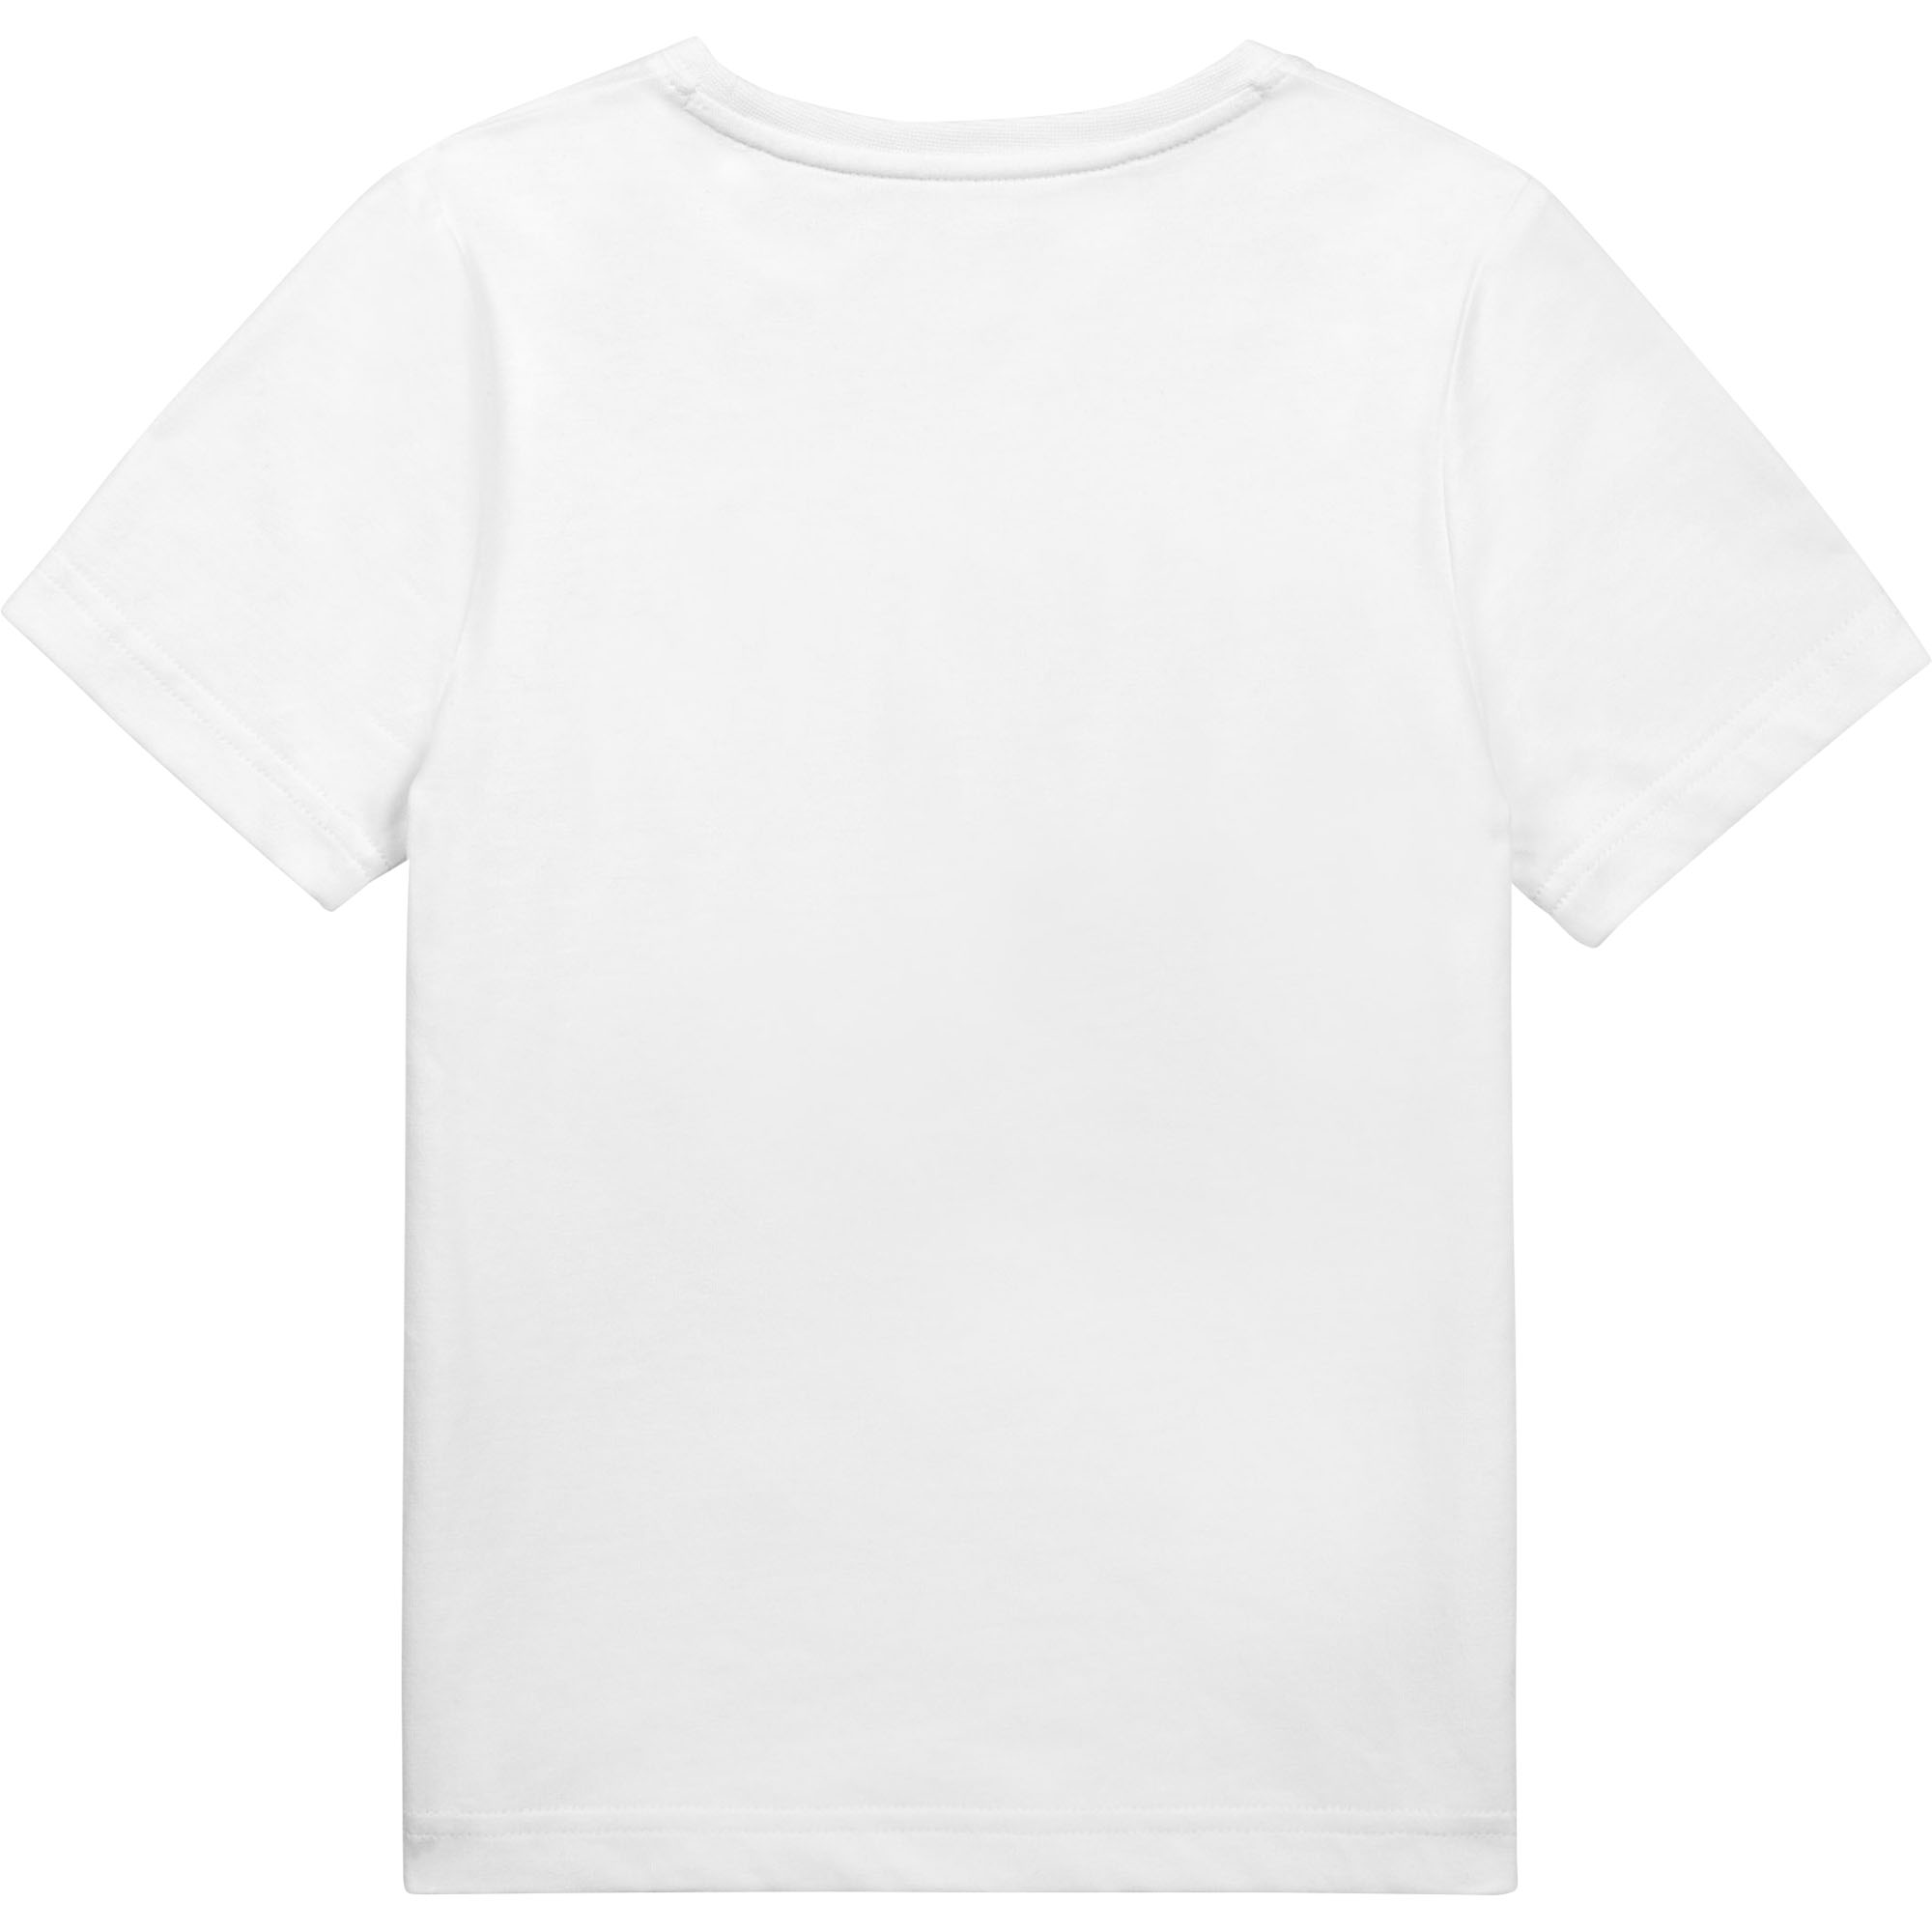 T-shirt jersey 100% cotone bio AIGLE Per UNISEX